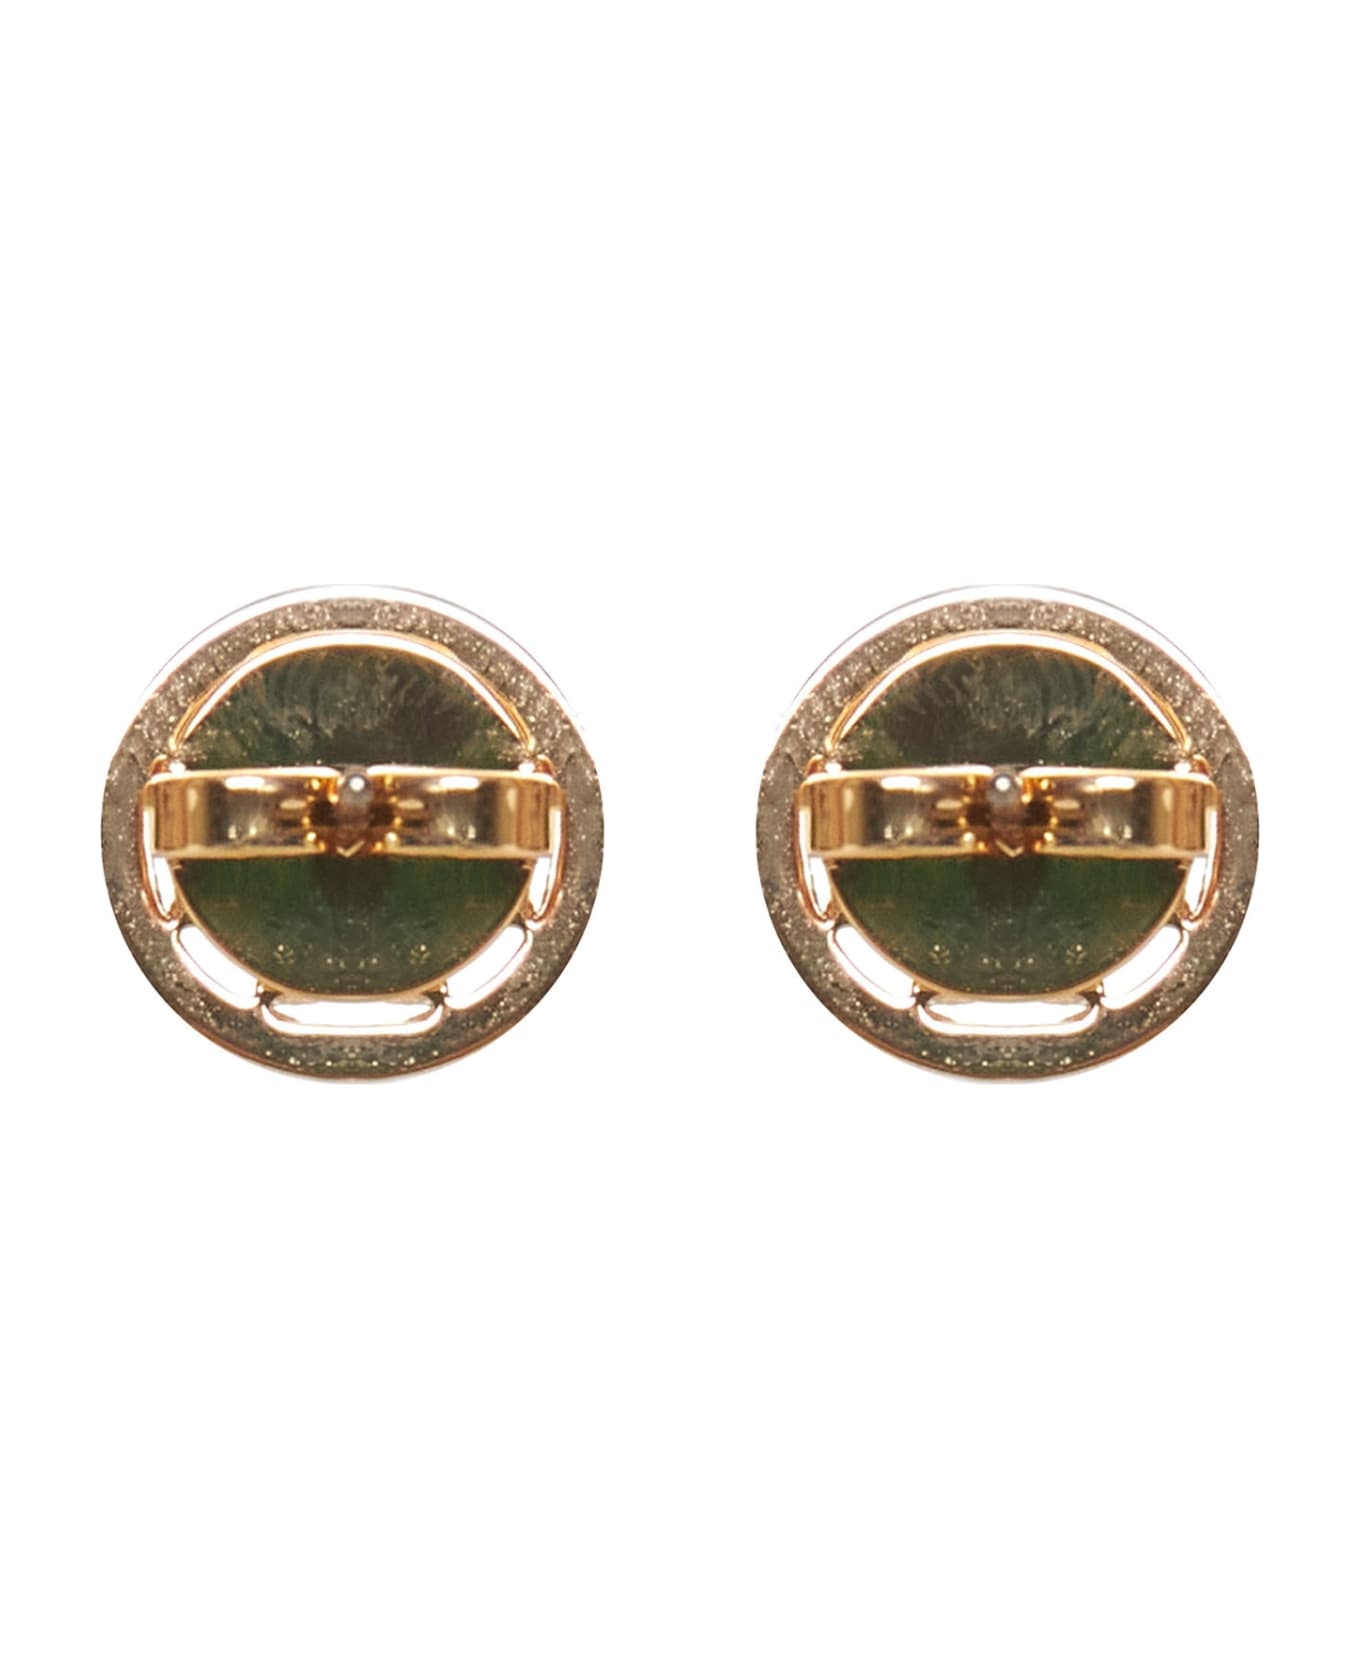 Tory Burch Miller Earrings - Tory gold / crystal